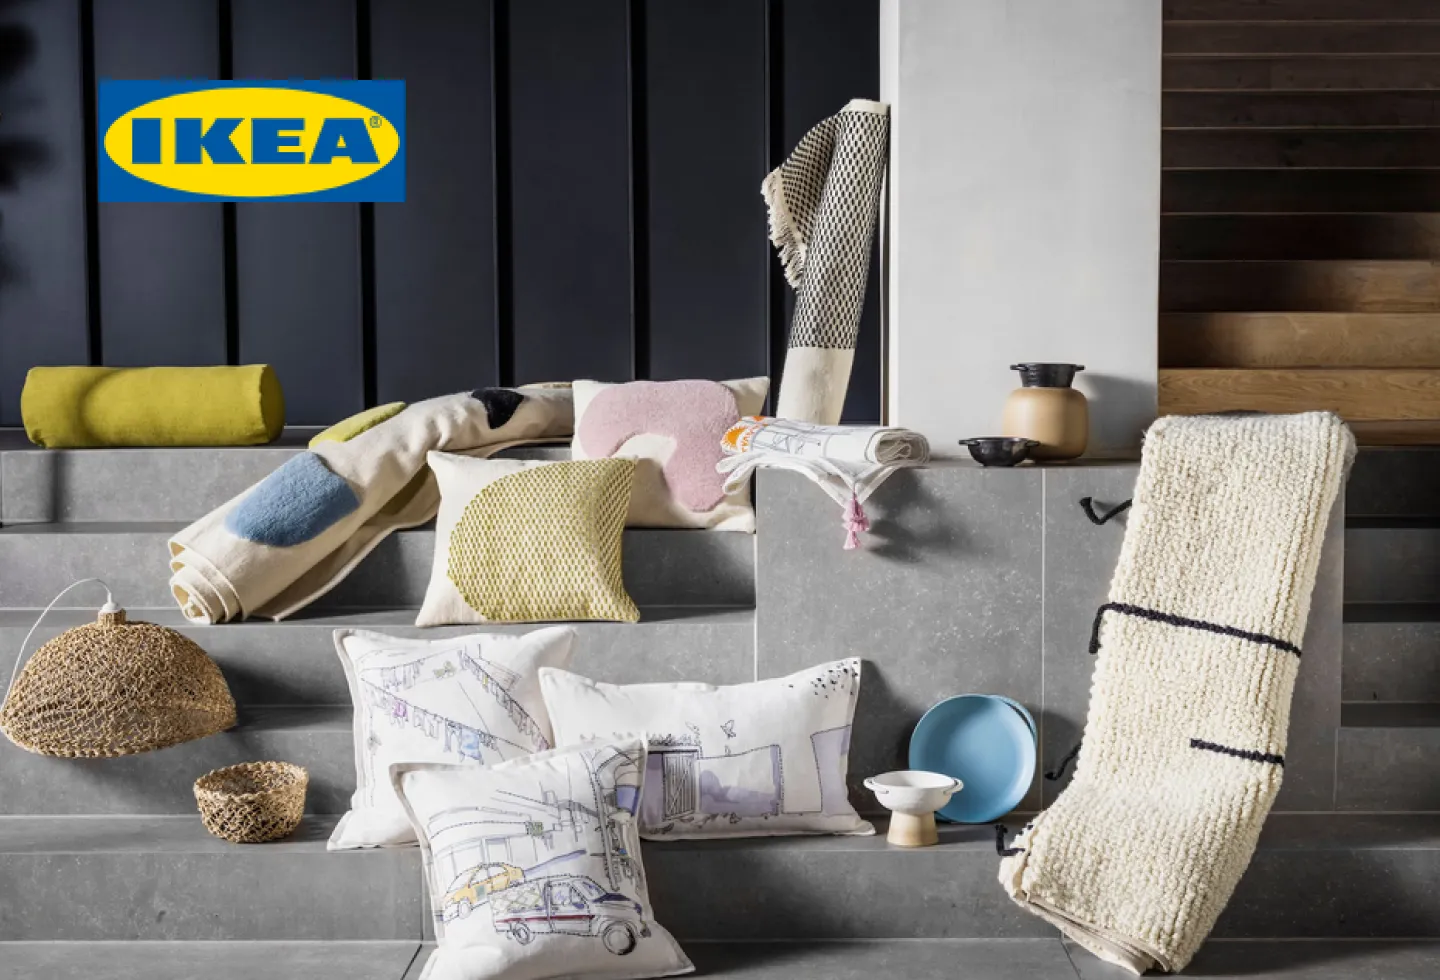 What is IKEA Social Entrepreneurship? A Model for Ethical Business